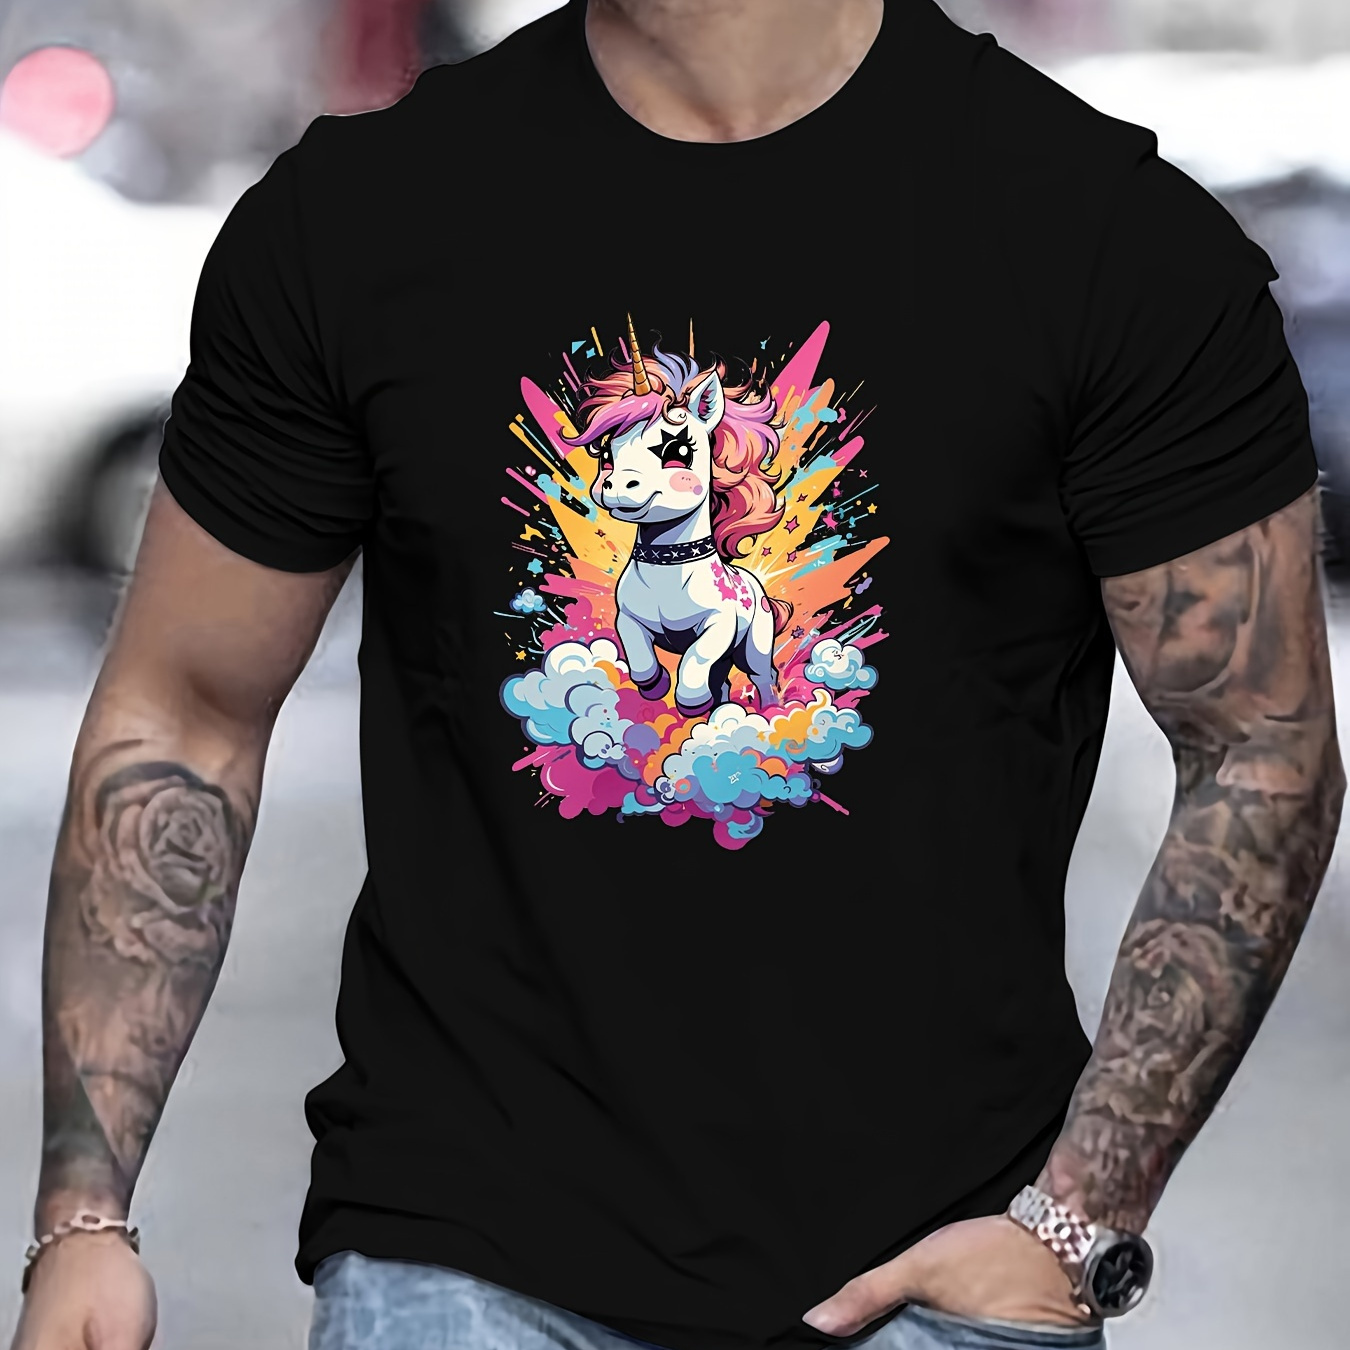 

Unicorn Print T Shirt, Tees For Men, Casual Short Sleeve T-shirt For Summer